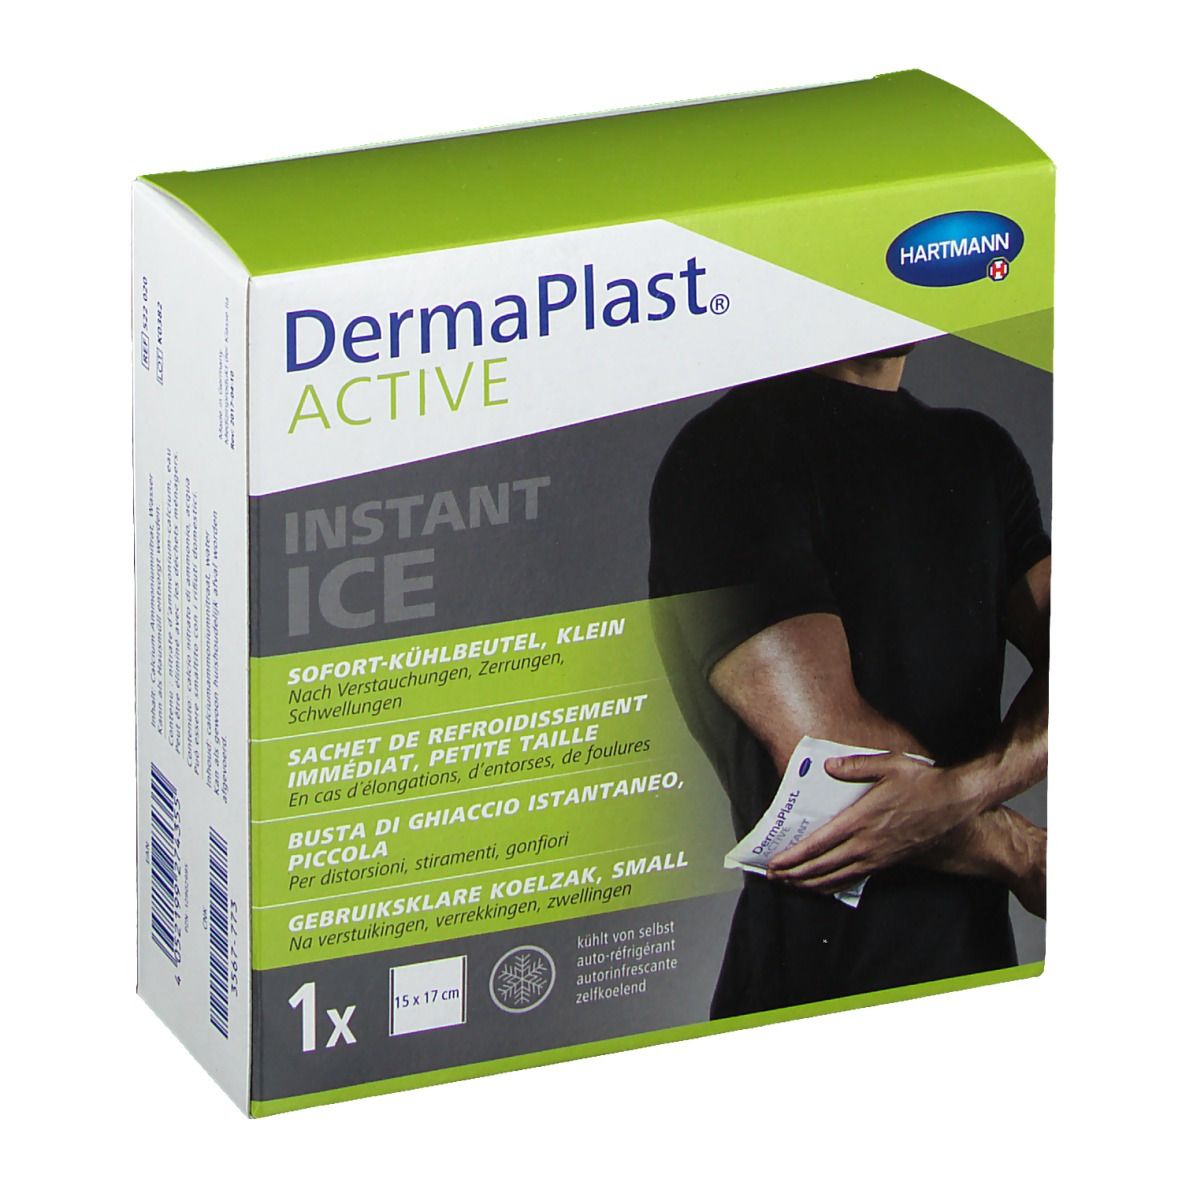 Dermaplast® Active Instant Ice 15 x 17 cm